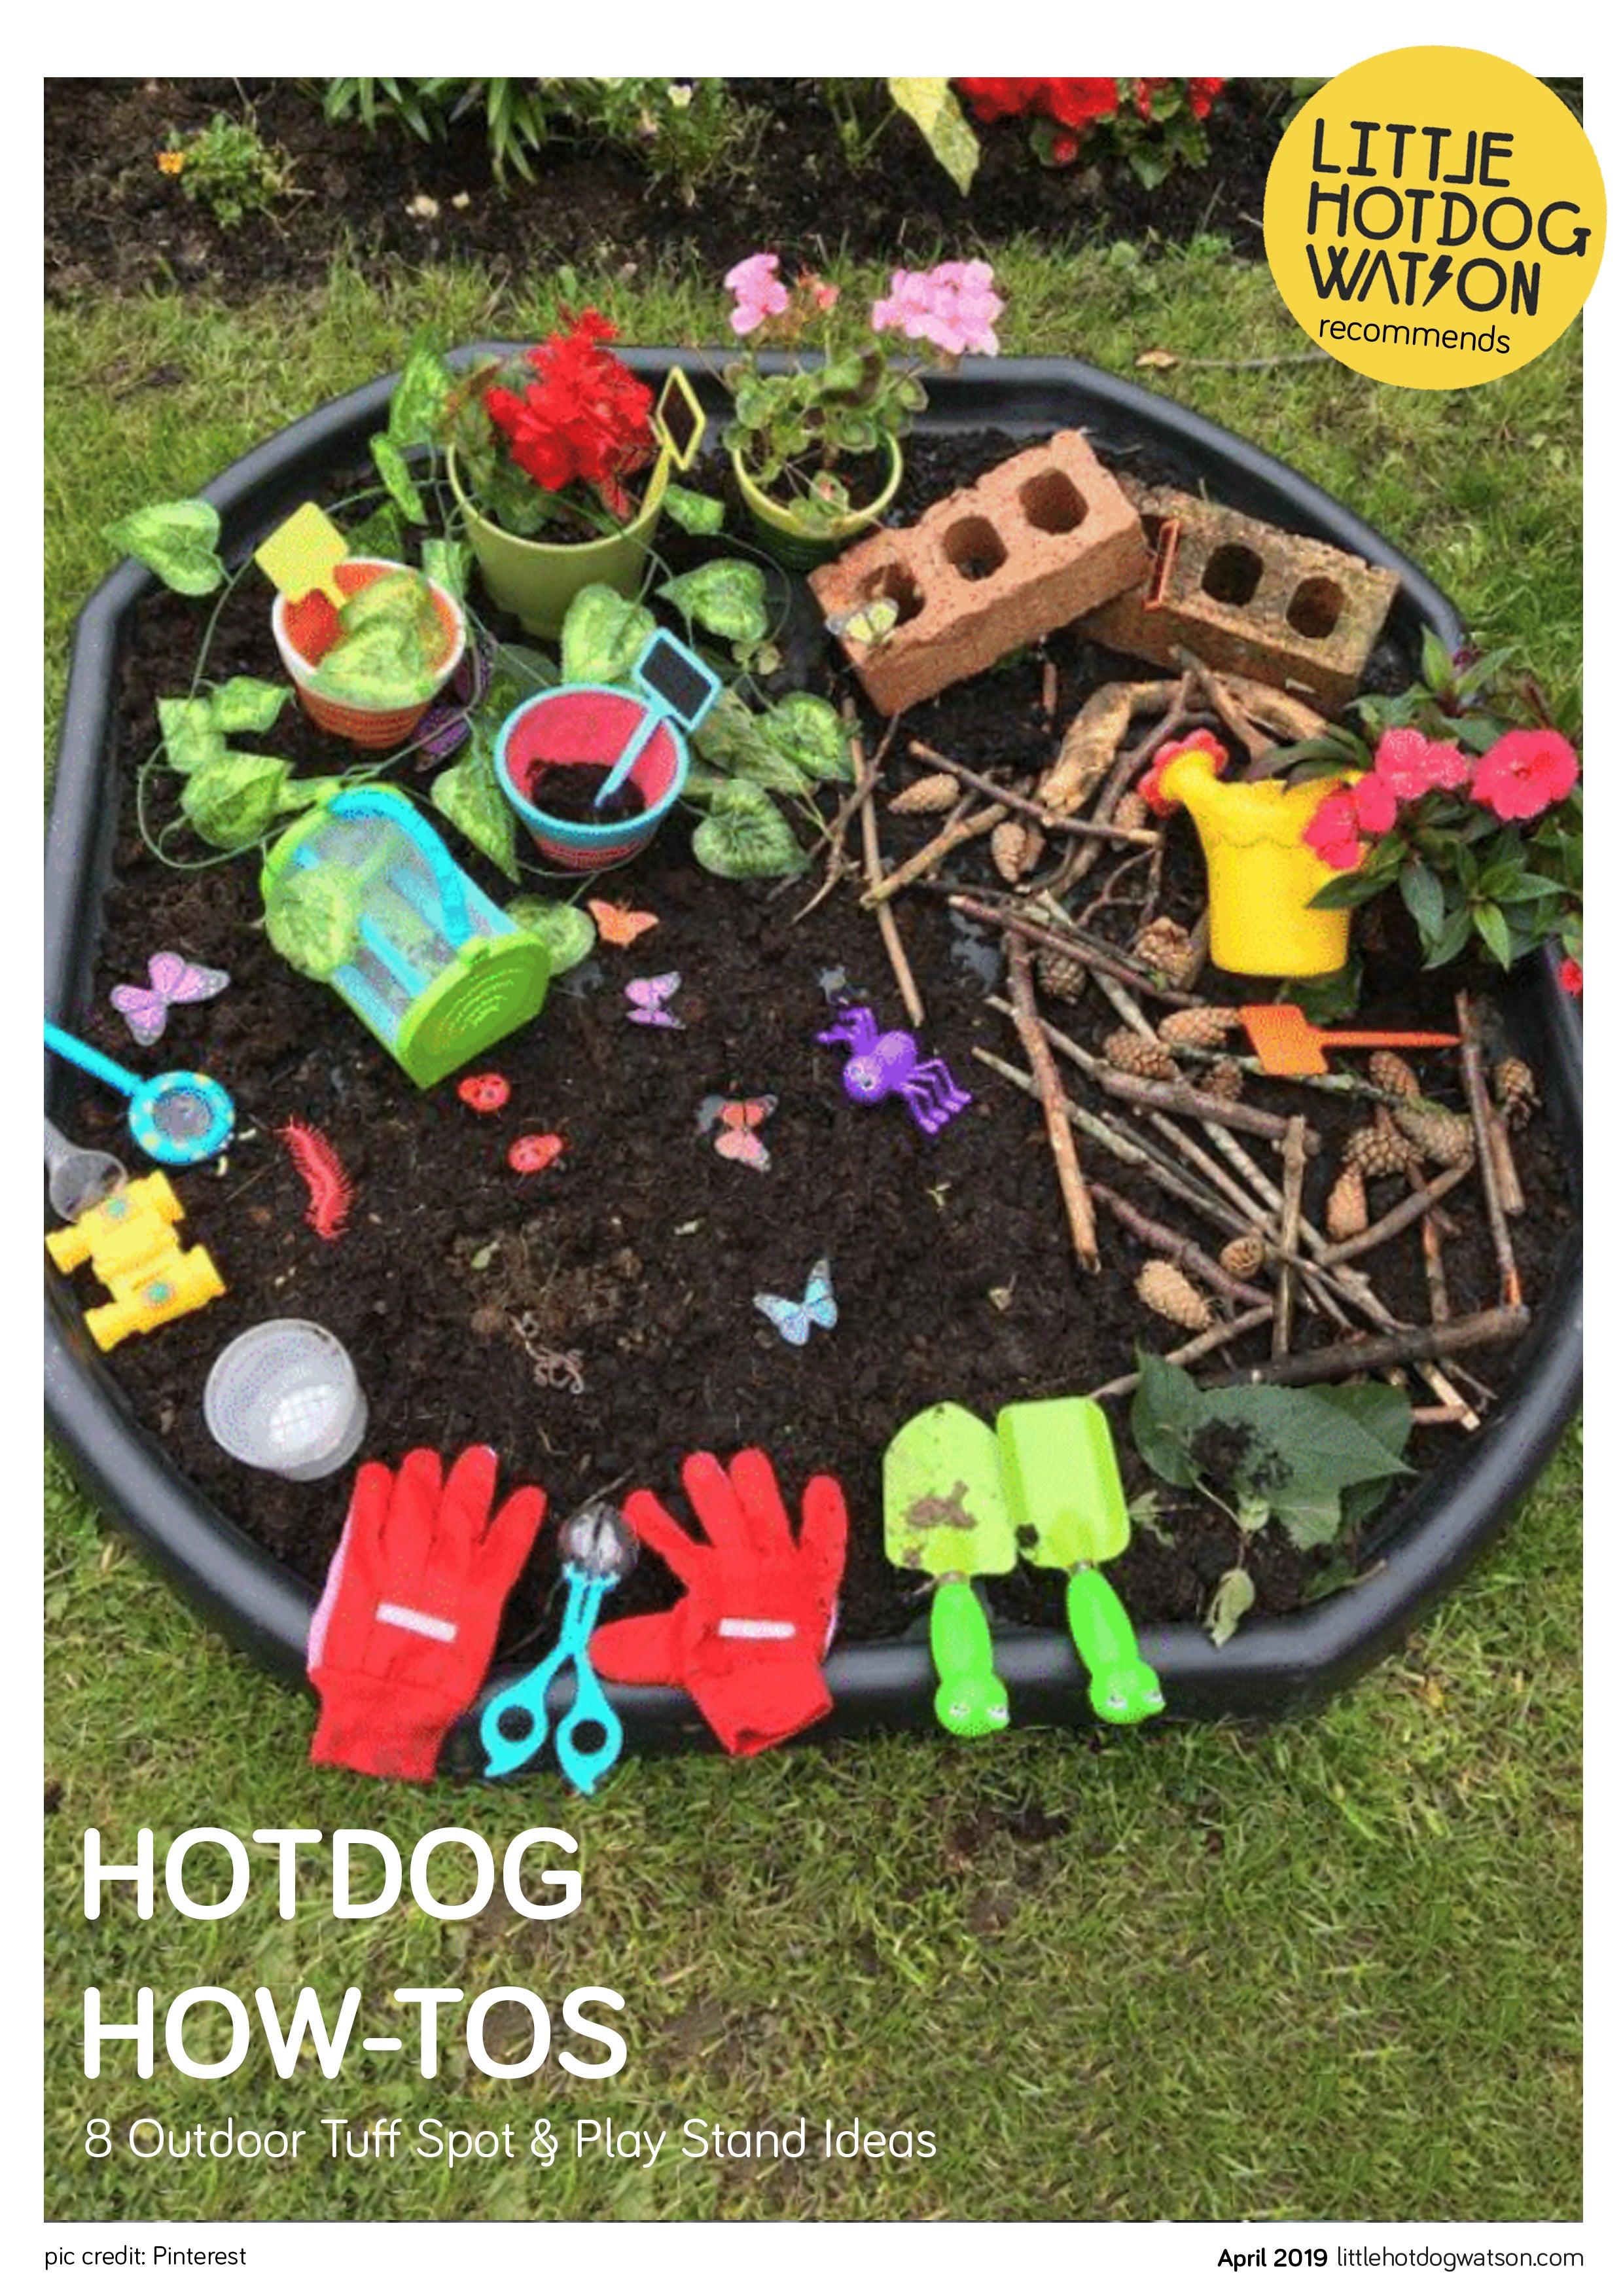 8 Outdoor Tuff Spot & Play Stand Ideas – Little Hotdog Watson